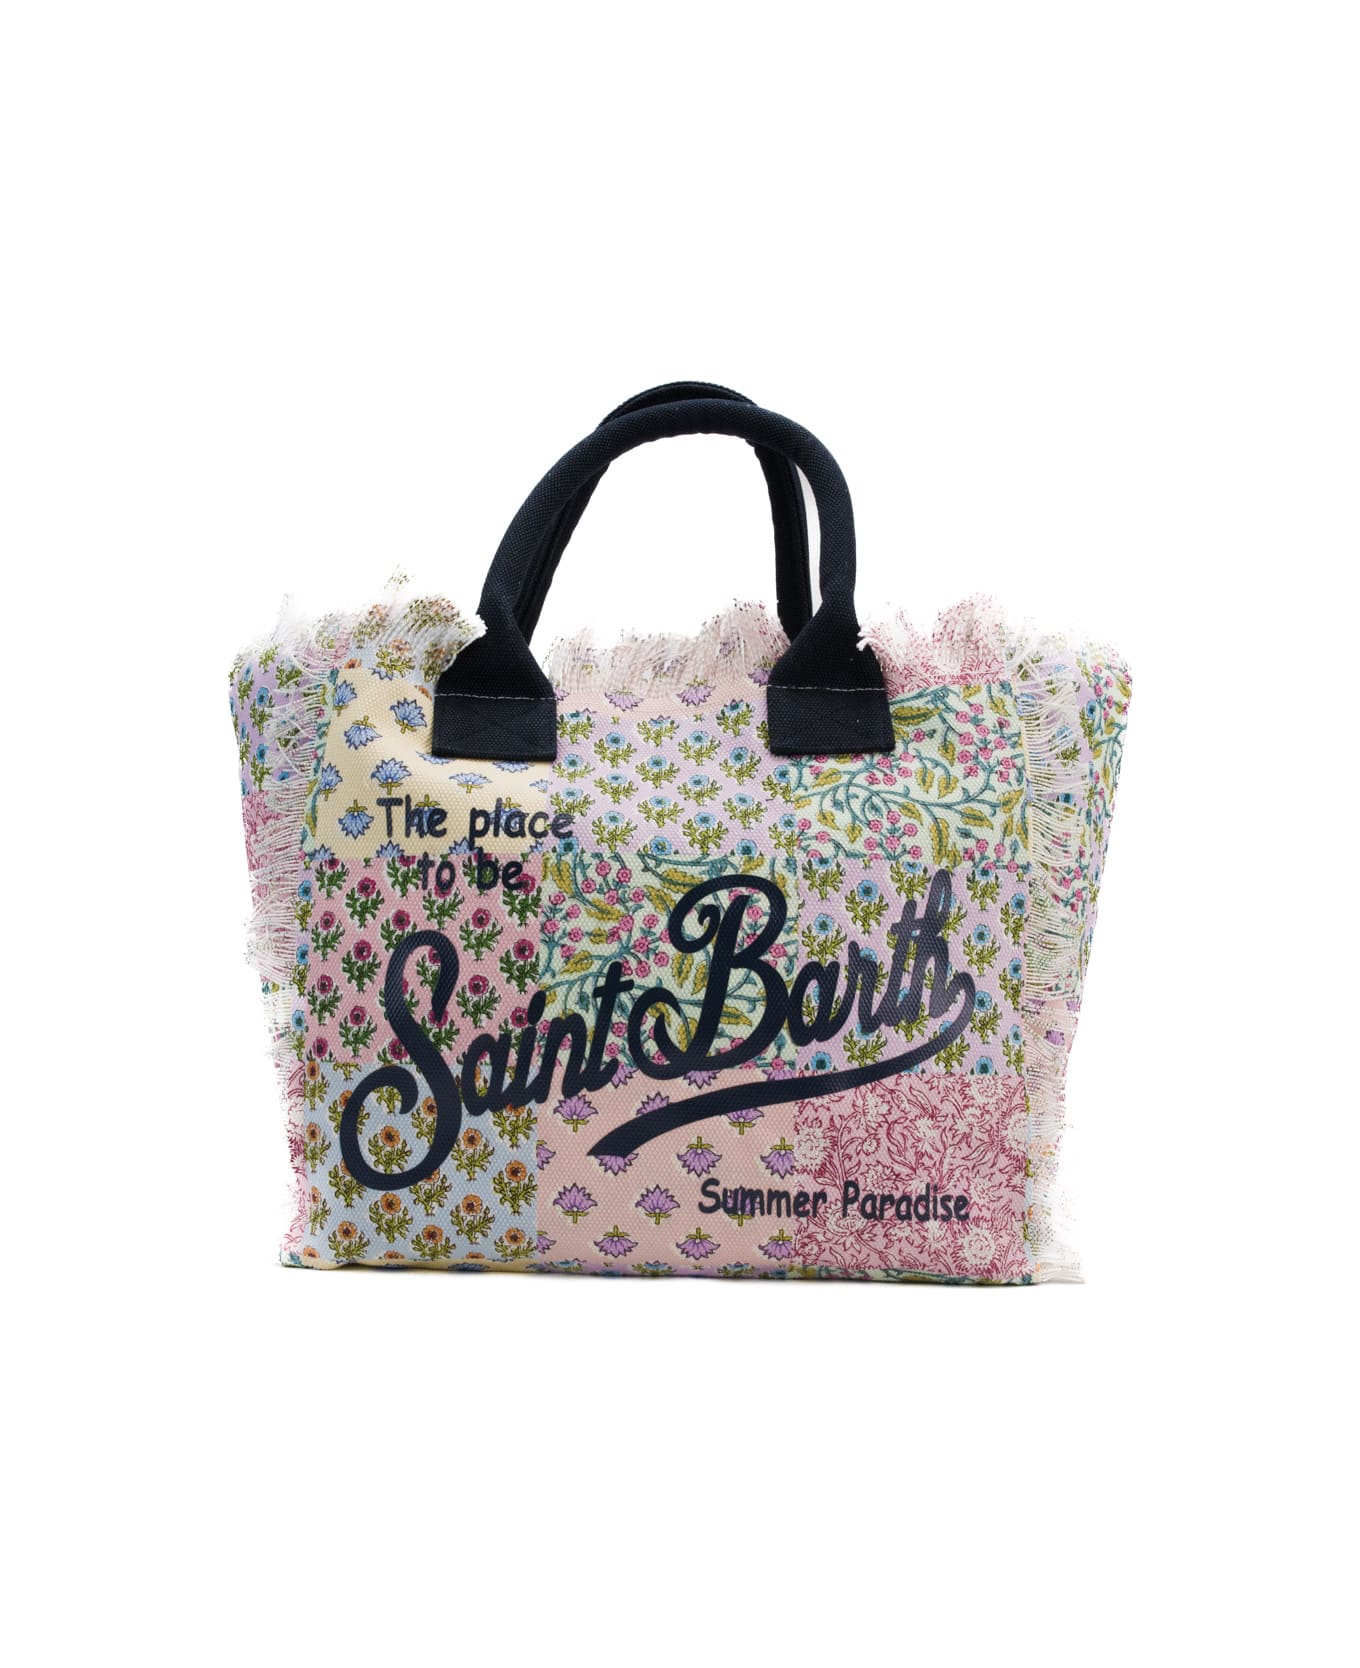 MC2 Saint Barth Vanity Radical Patch Bag In Canvas - MultiColour